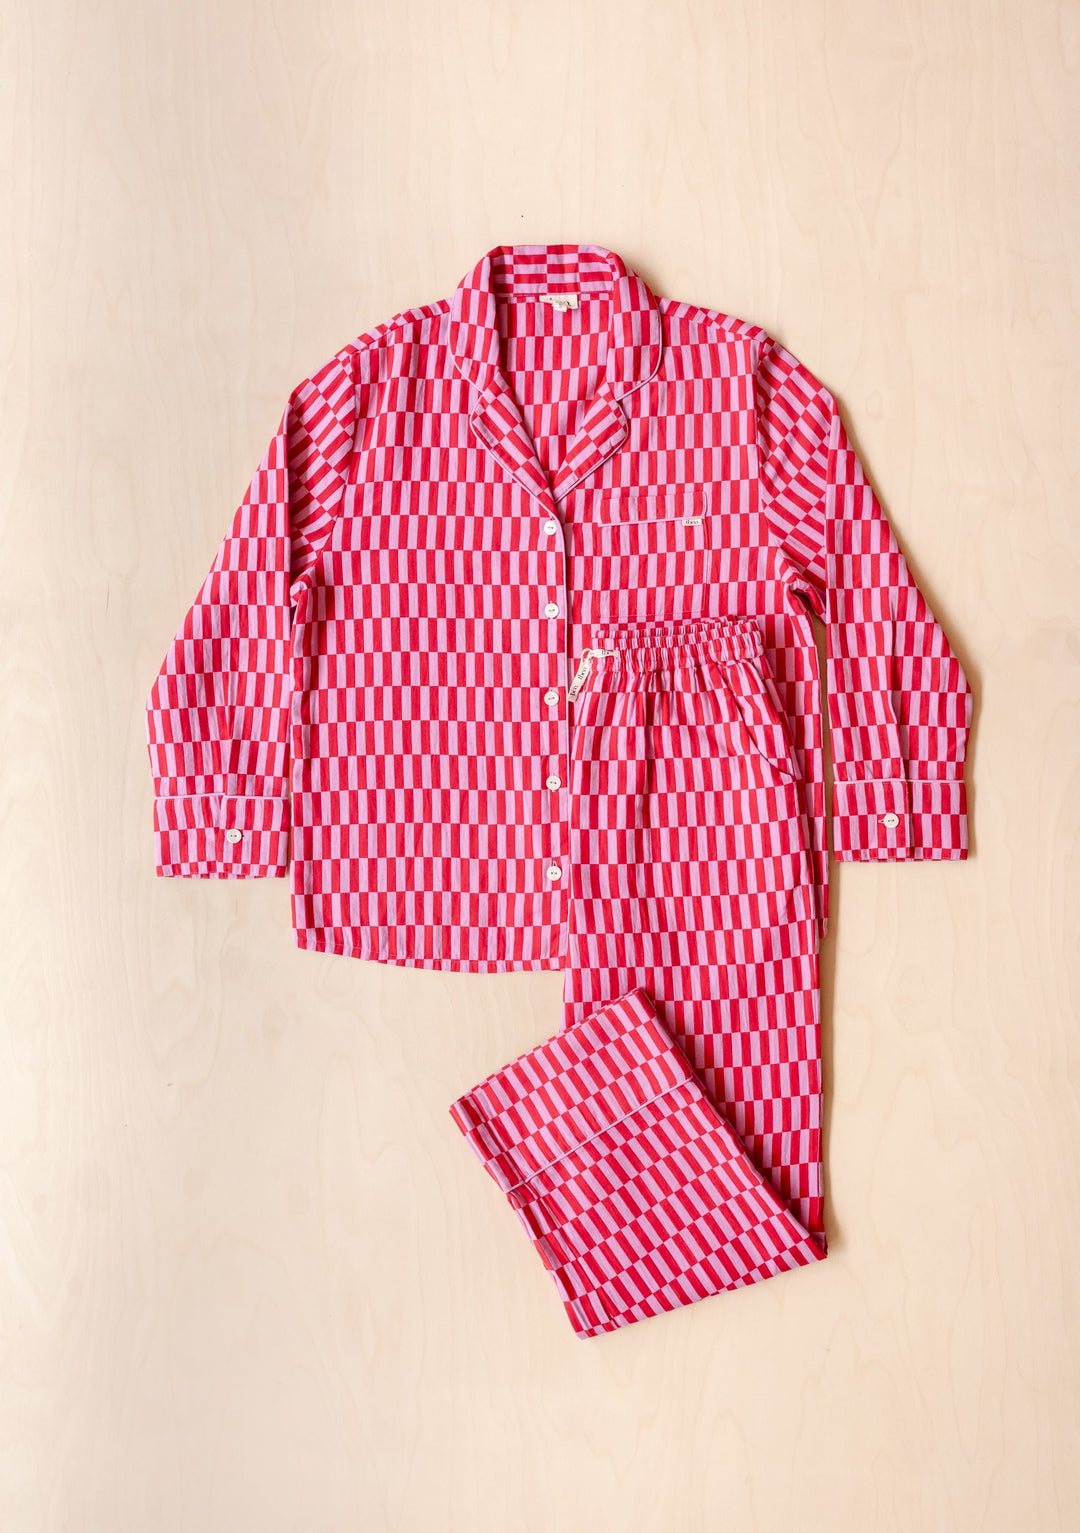 Cotton Pajamas in Pink Checkerboard